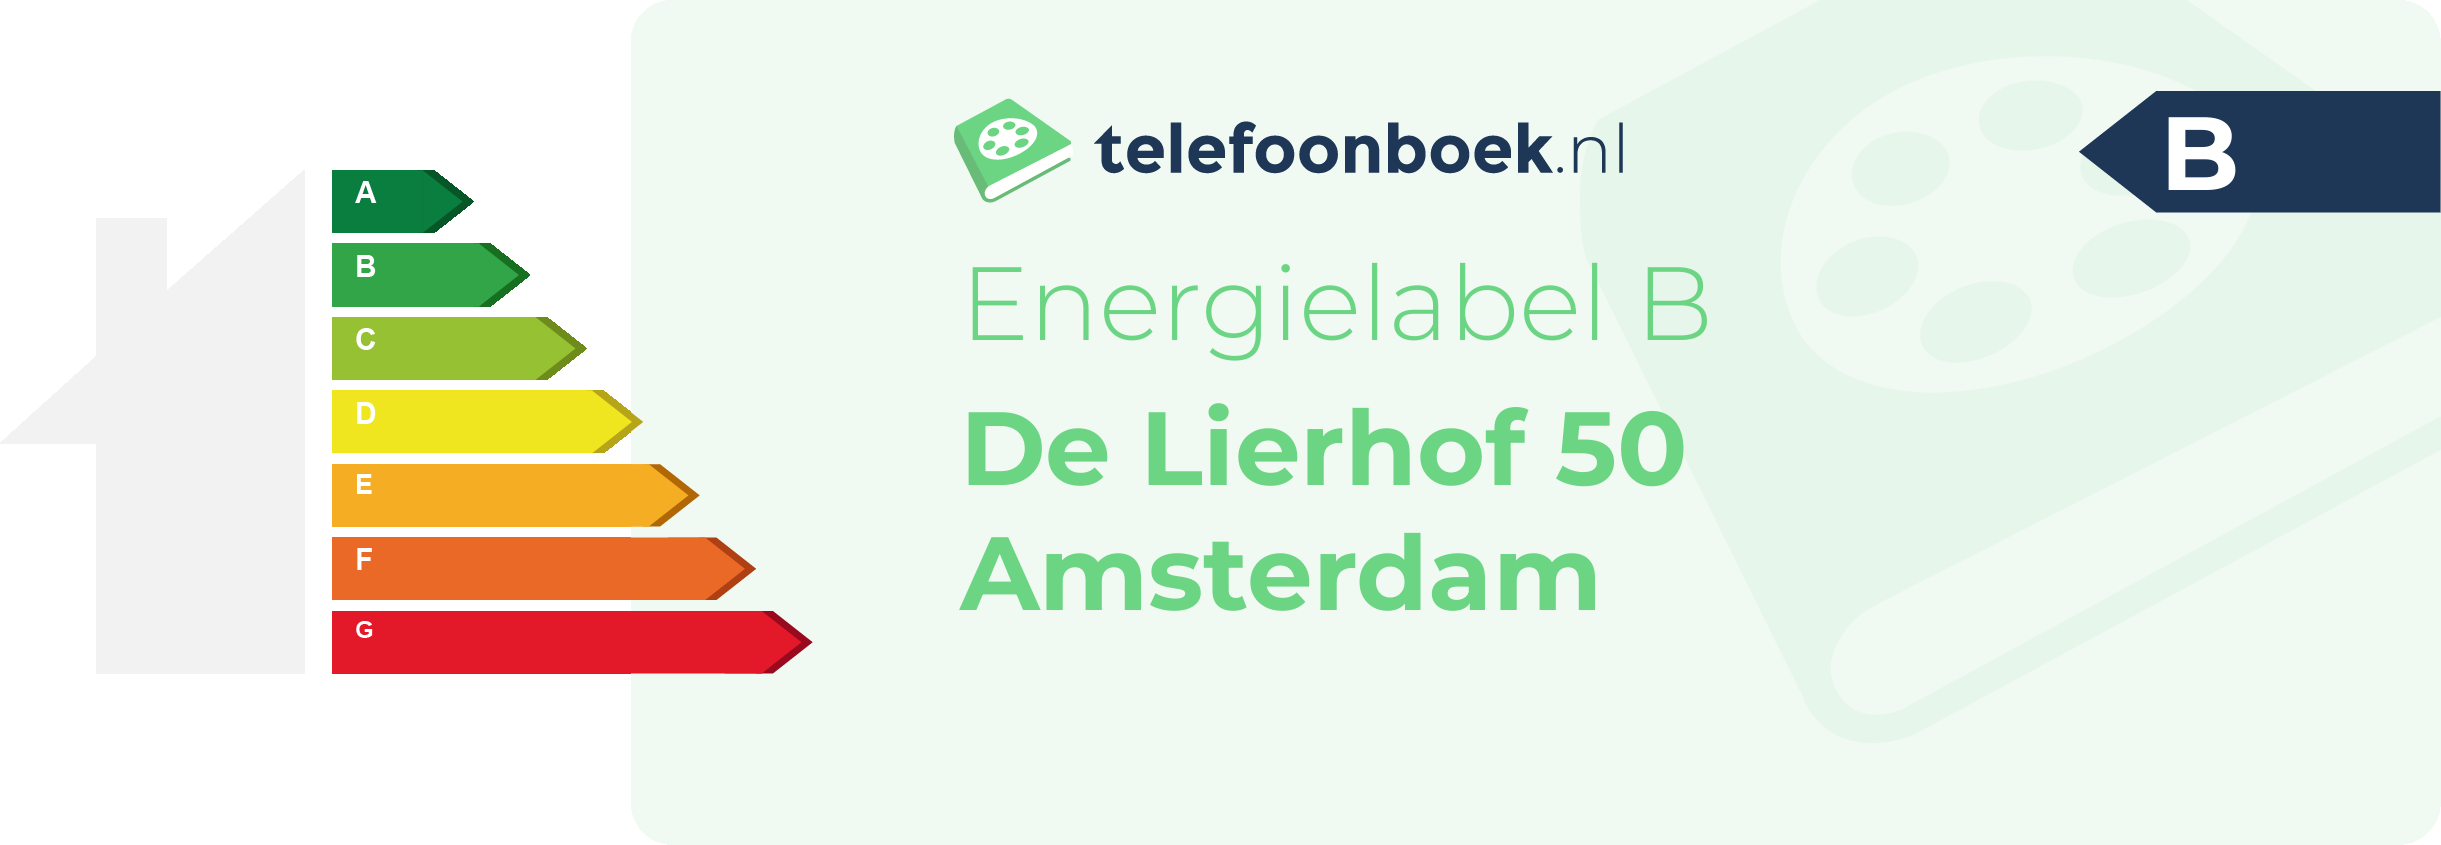 Energielabel De Lierhof 50 Amsterdam